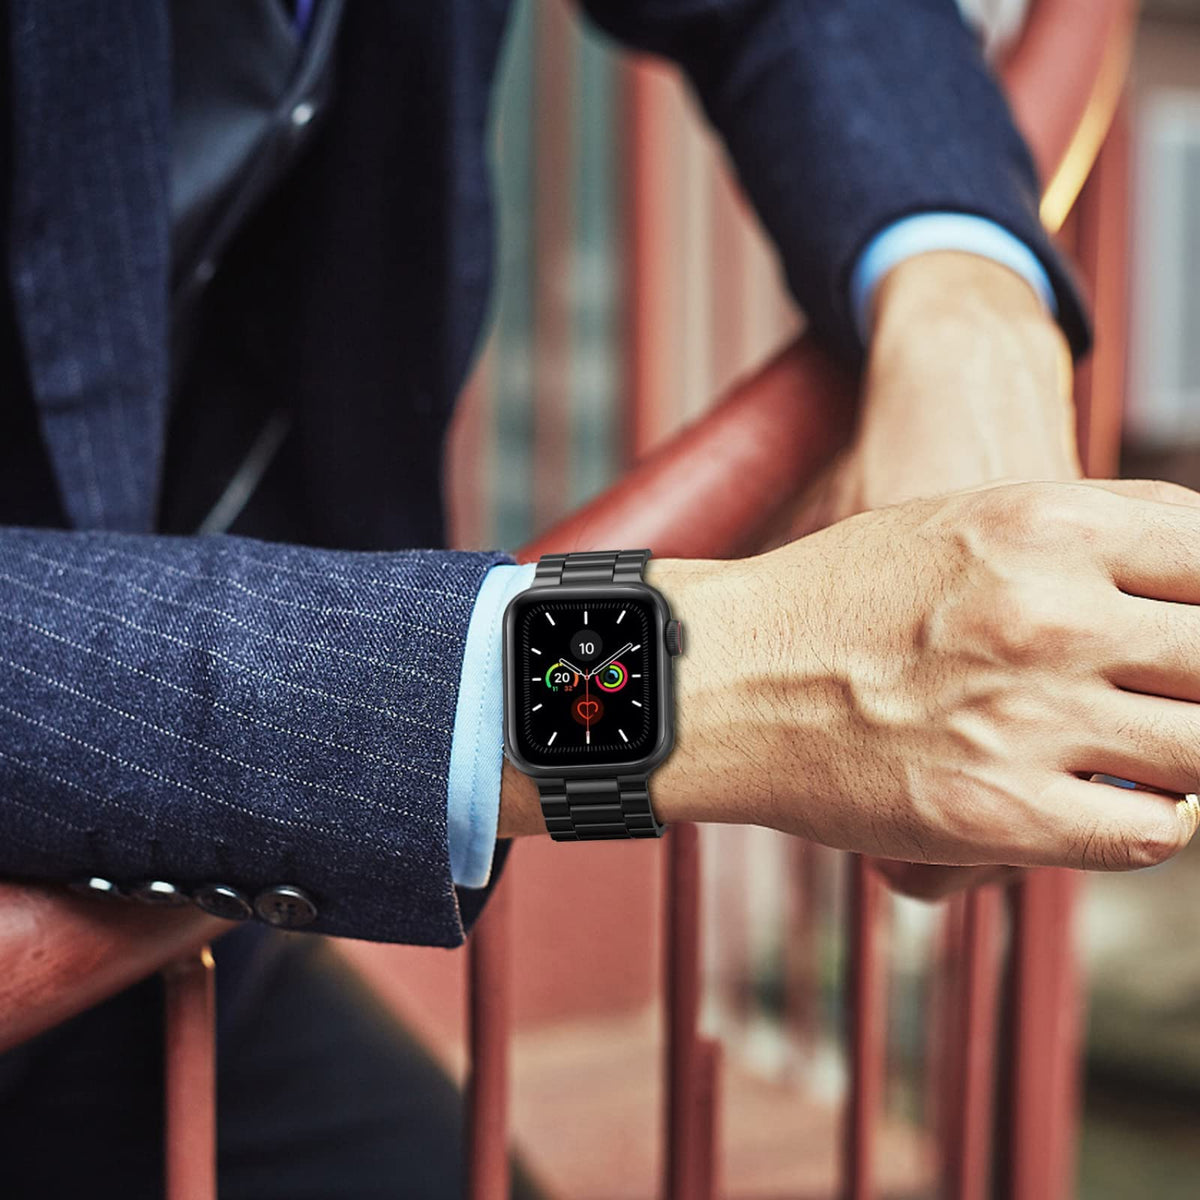 Apple-Watch-Armband aus Edelstahl